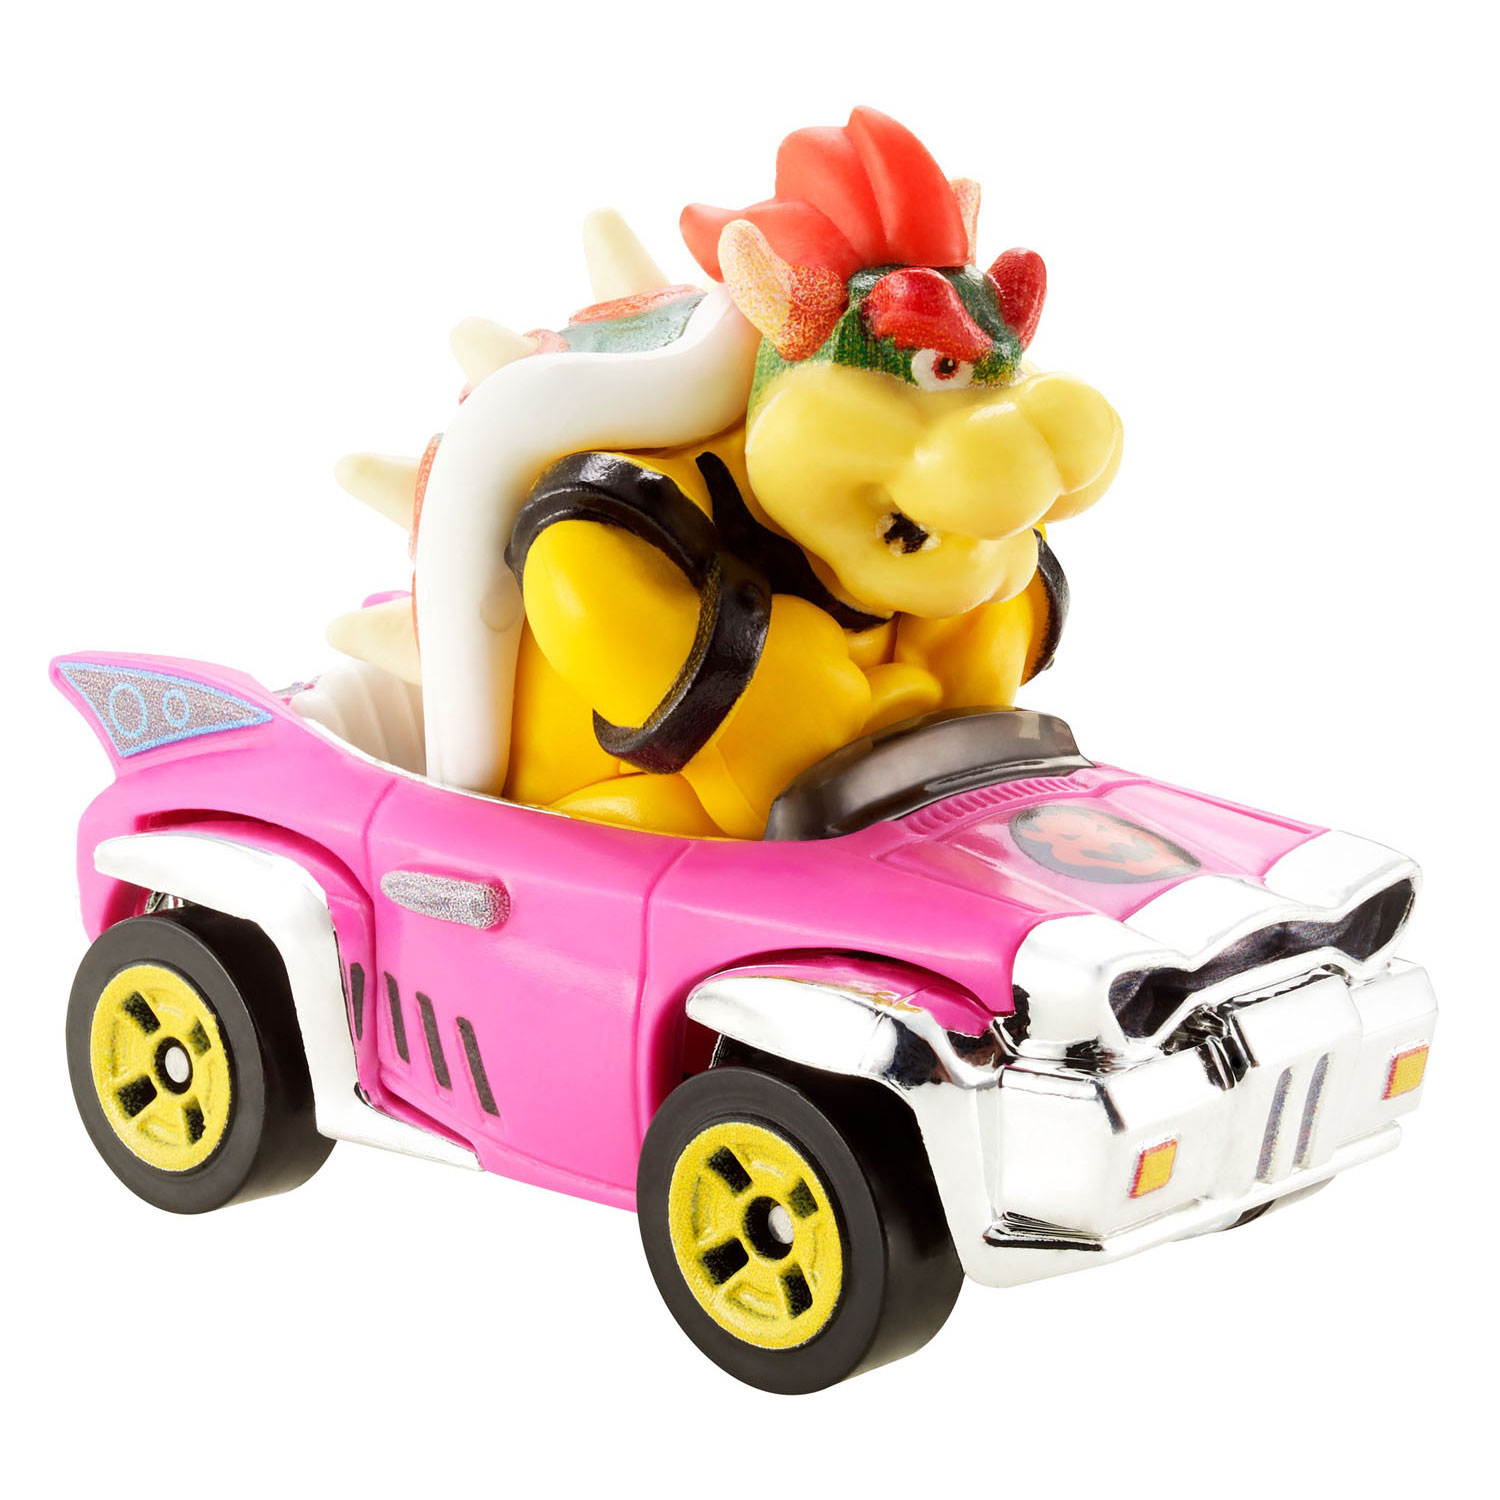 Hot Wheels Mario Kart Replica Die-cast Auto - Bowser